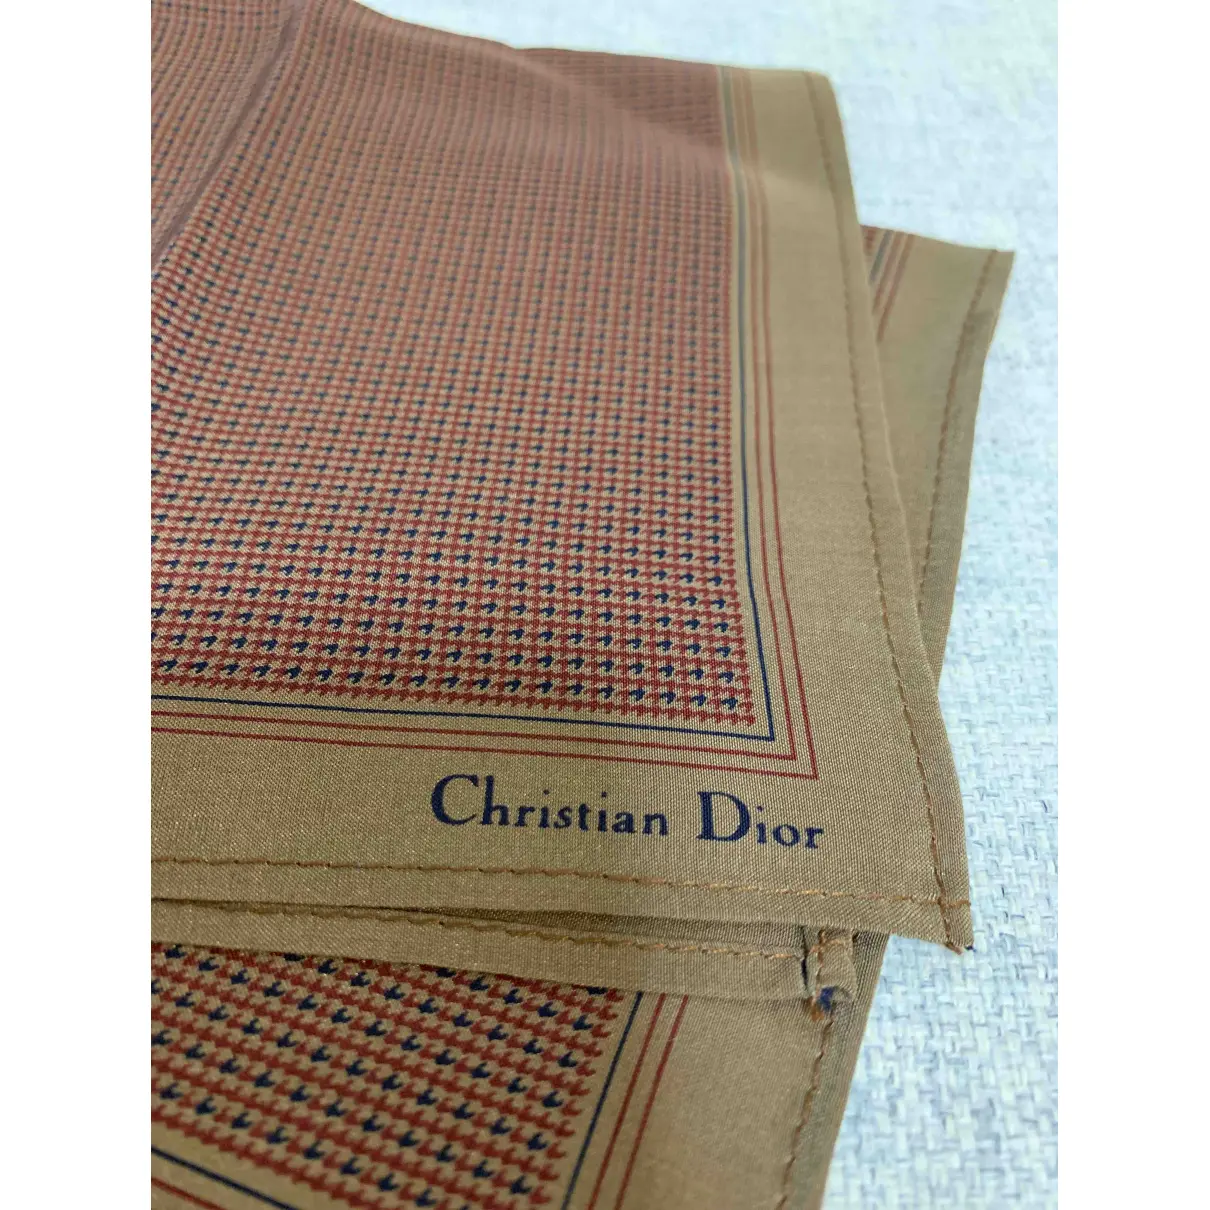 Silk handkerchief Christian Dior - Vintage